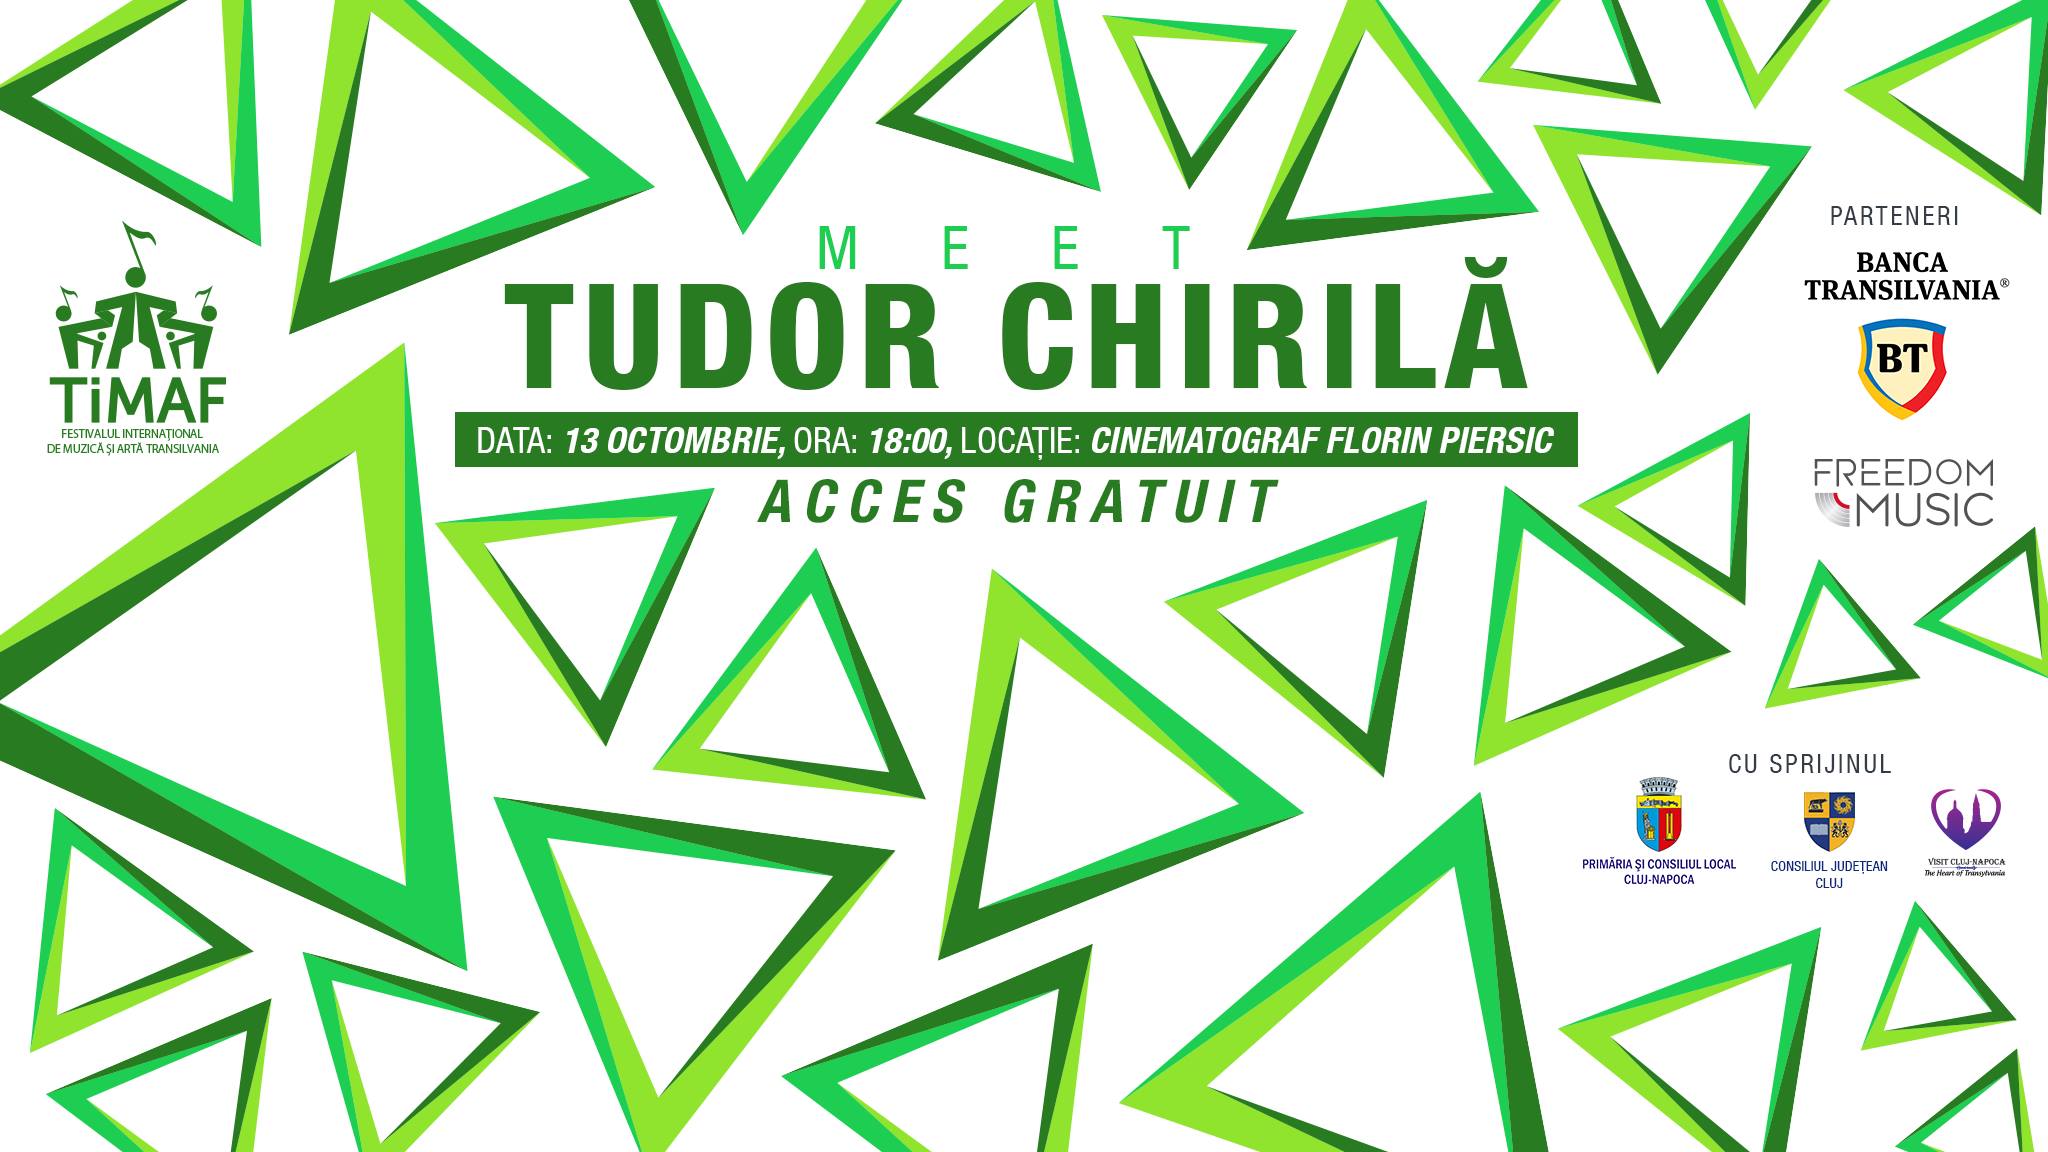 Meet Tudor Chirilă @ Cinema Florin Piersic